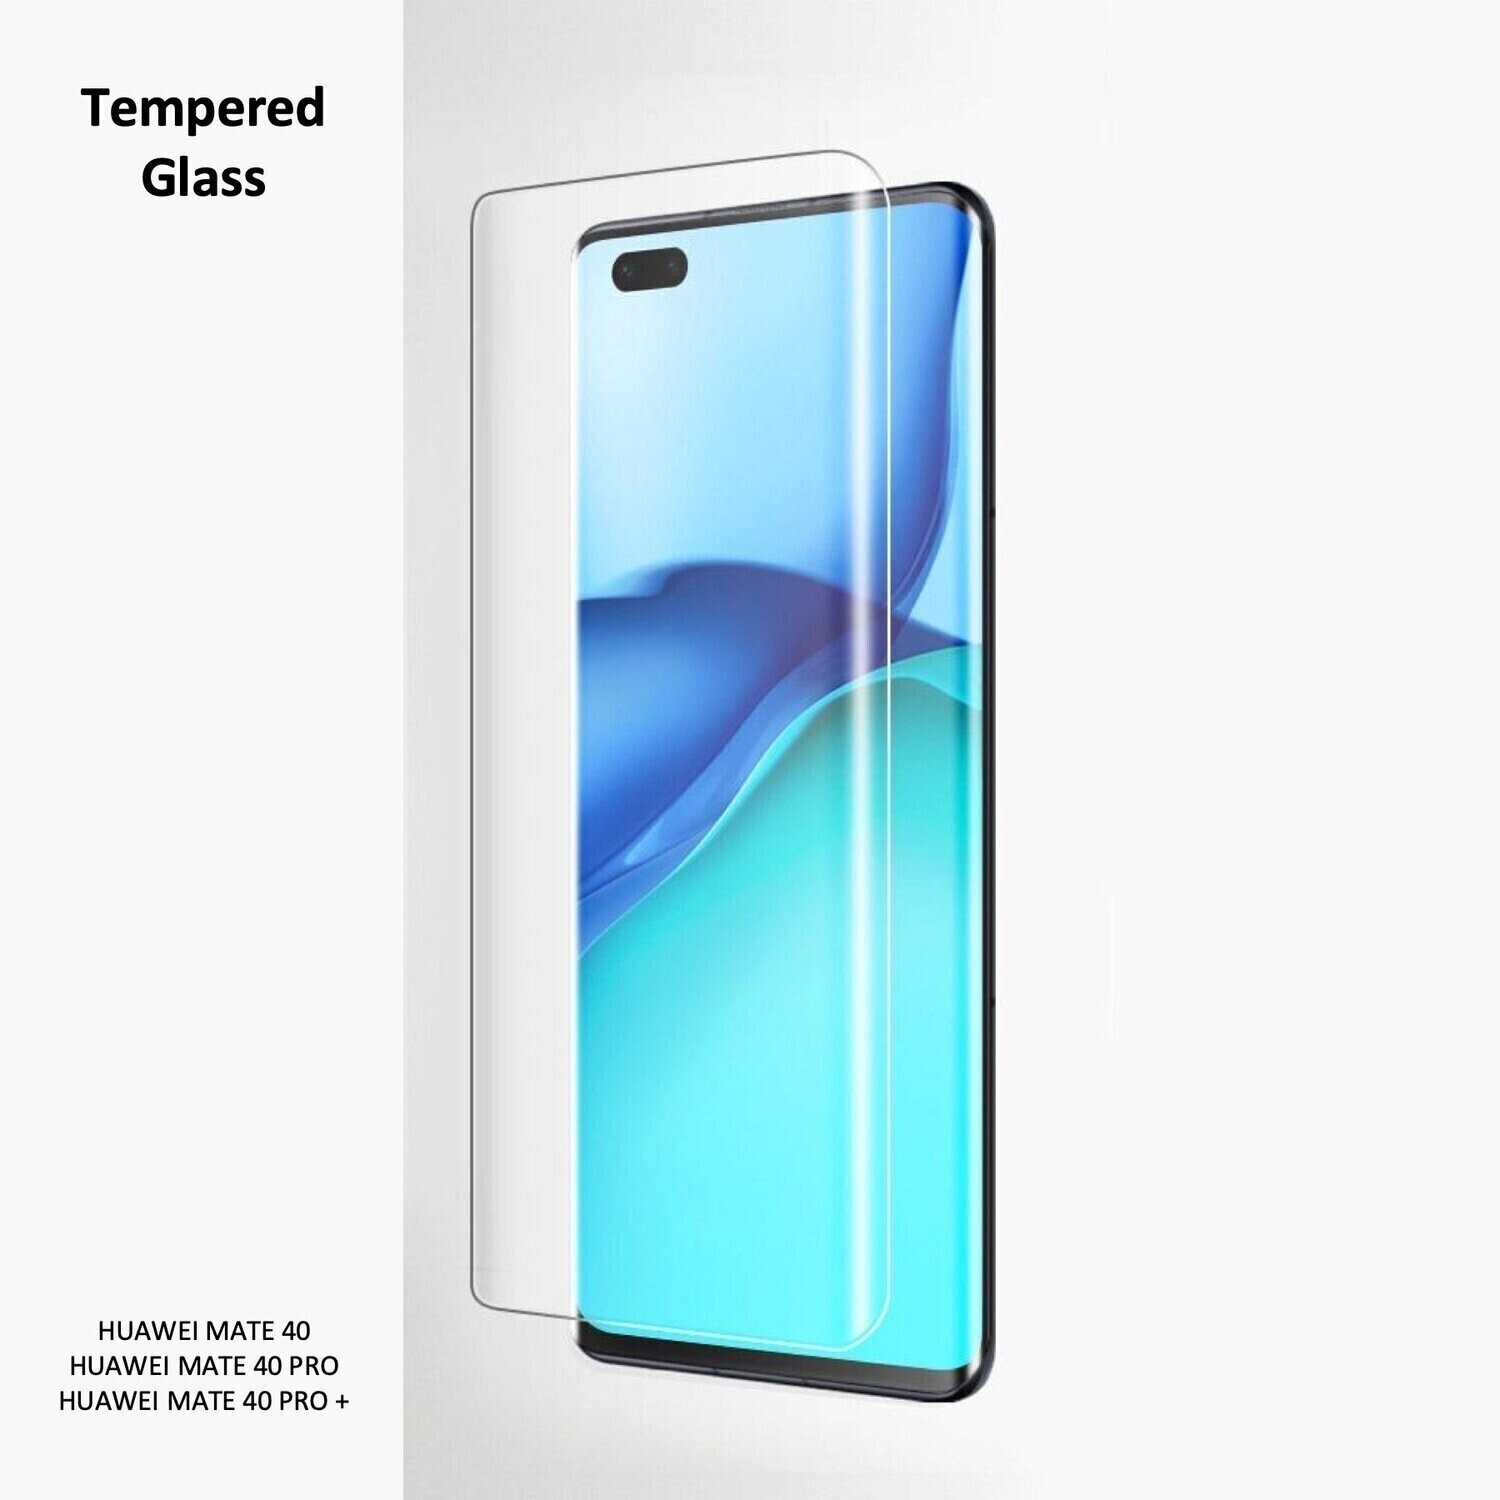 Komass Huawei Mate 40 Pro Tempered Glass, 3D UV Clear